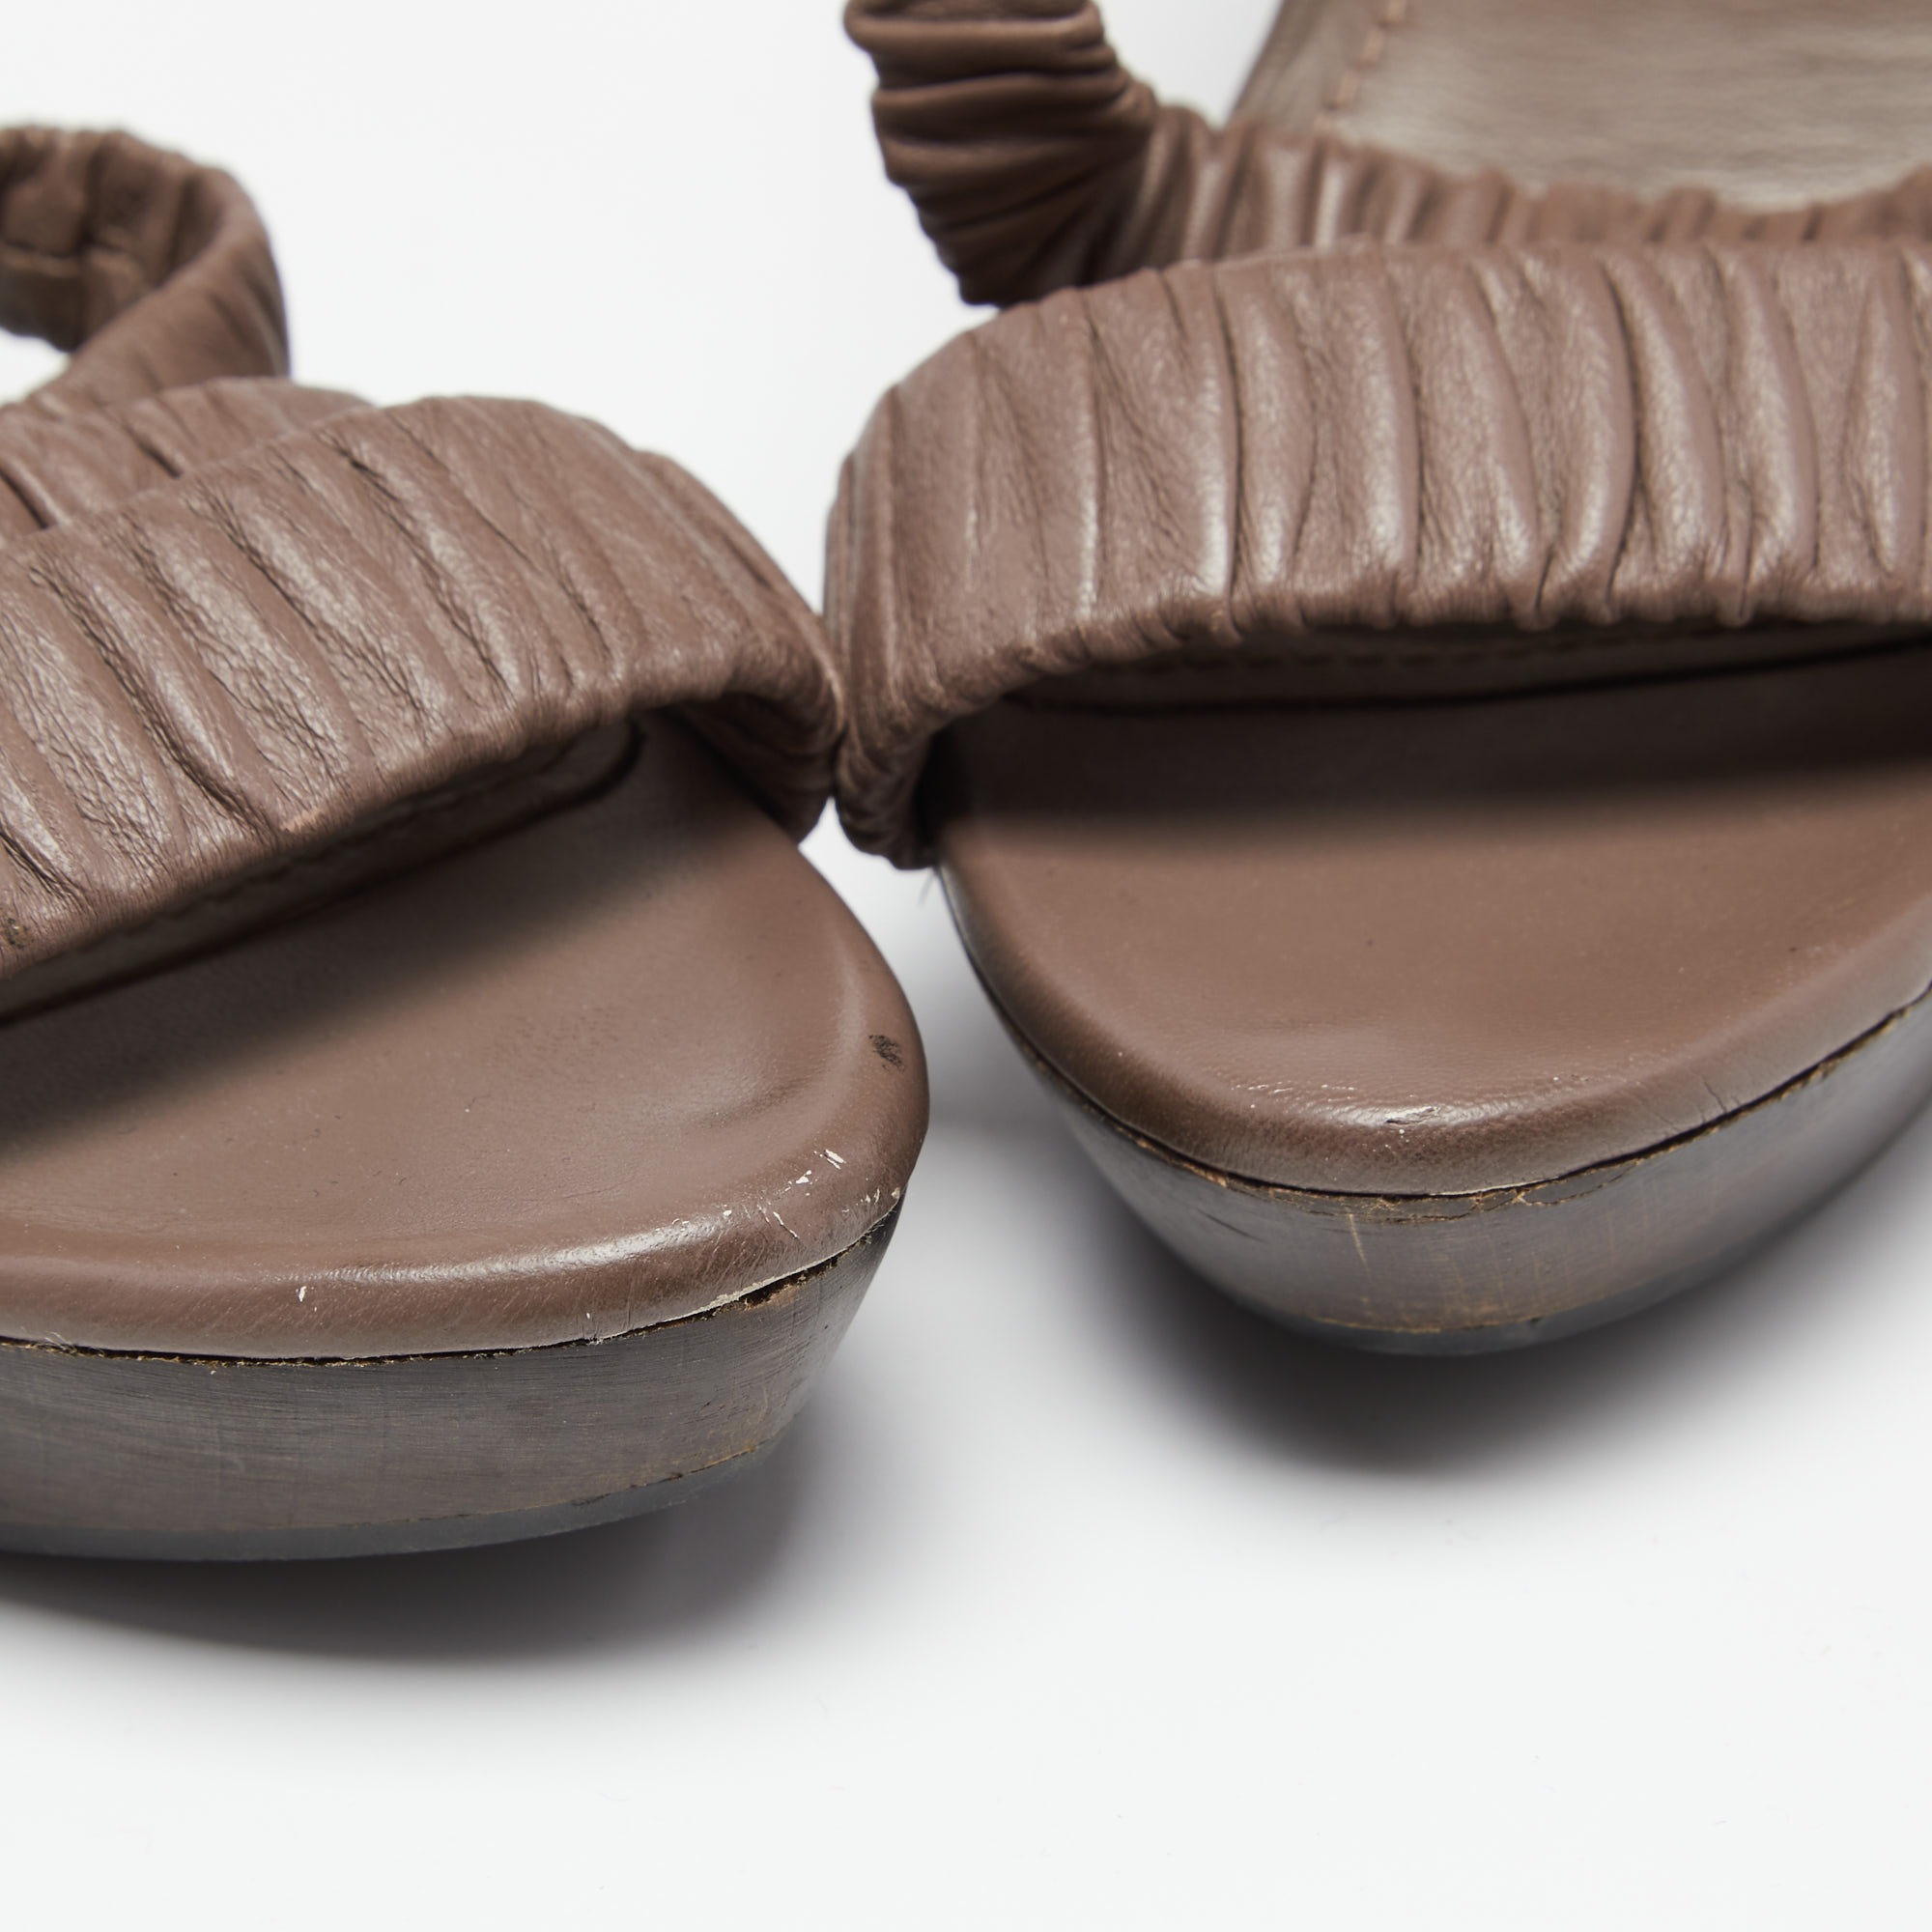 Burberry Mauve Pleated Leather Platform Sandals Size 38